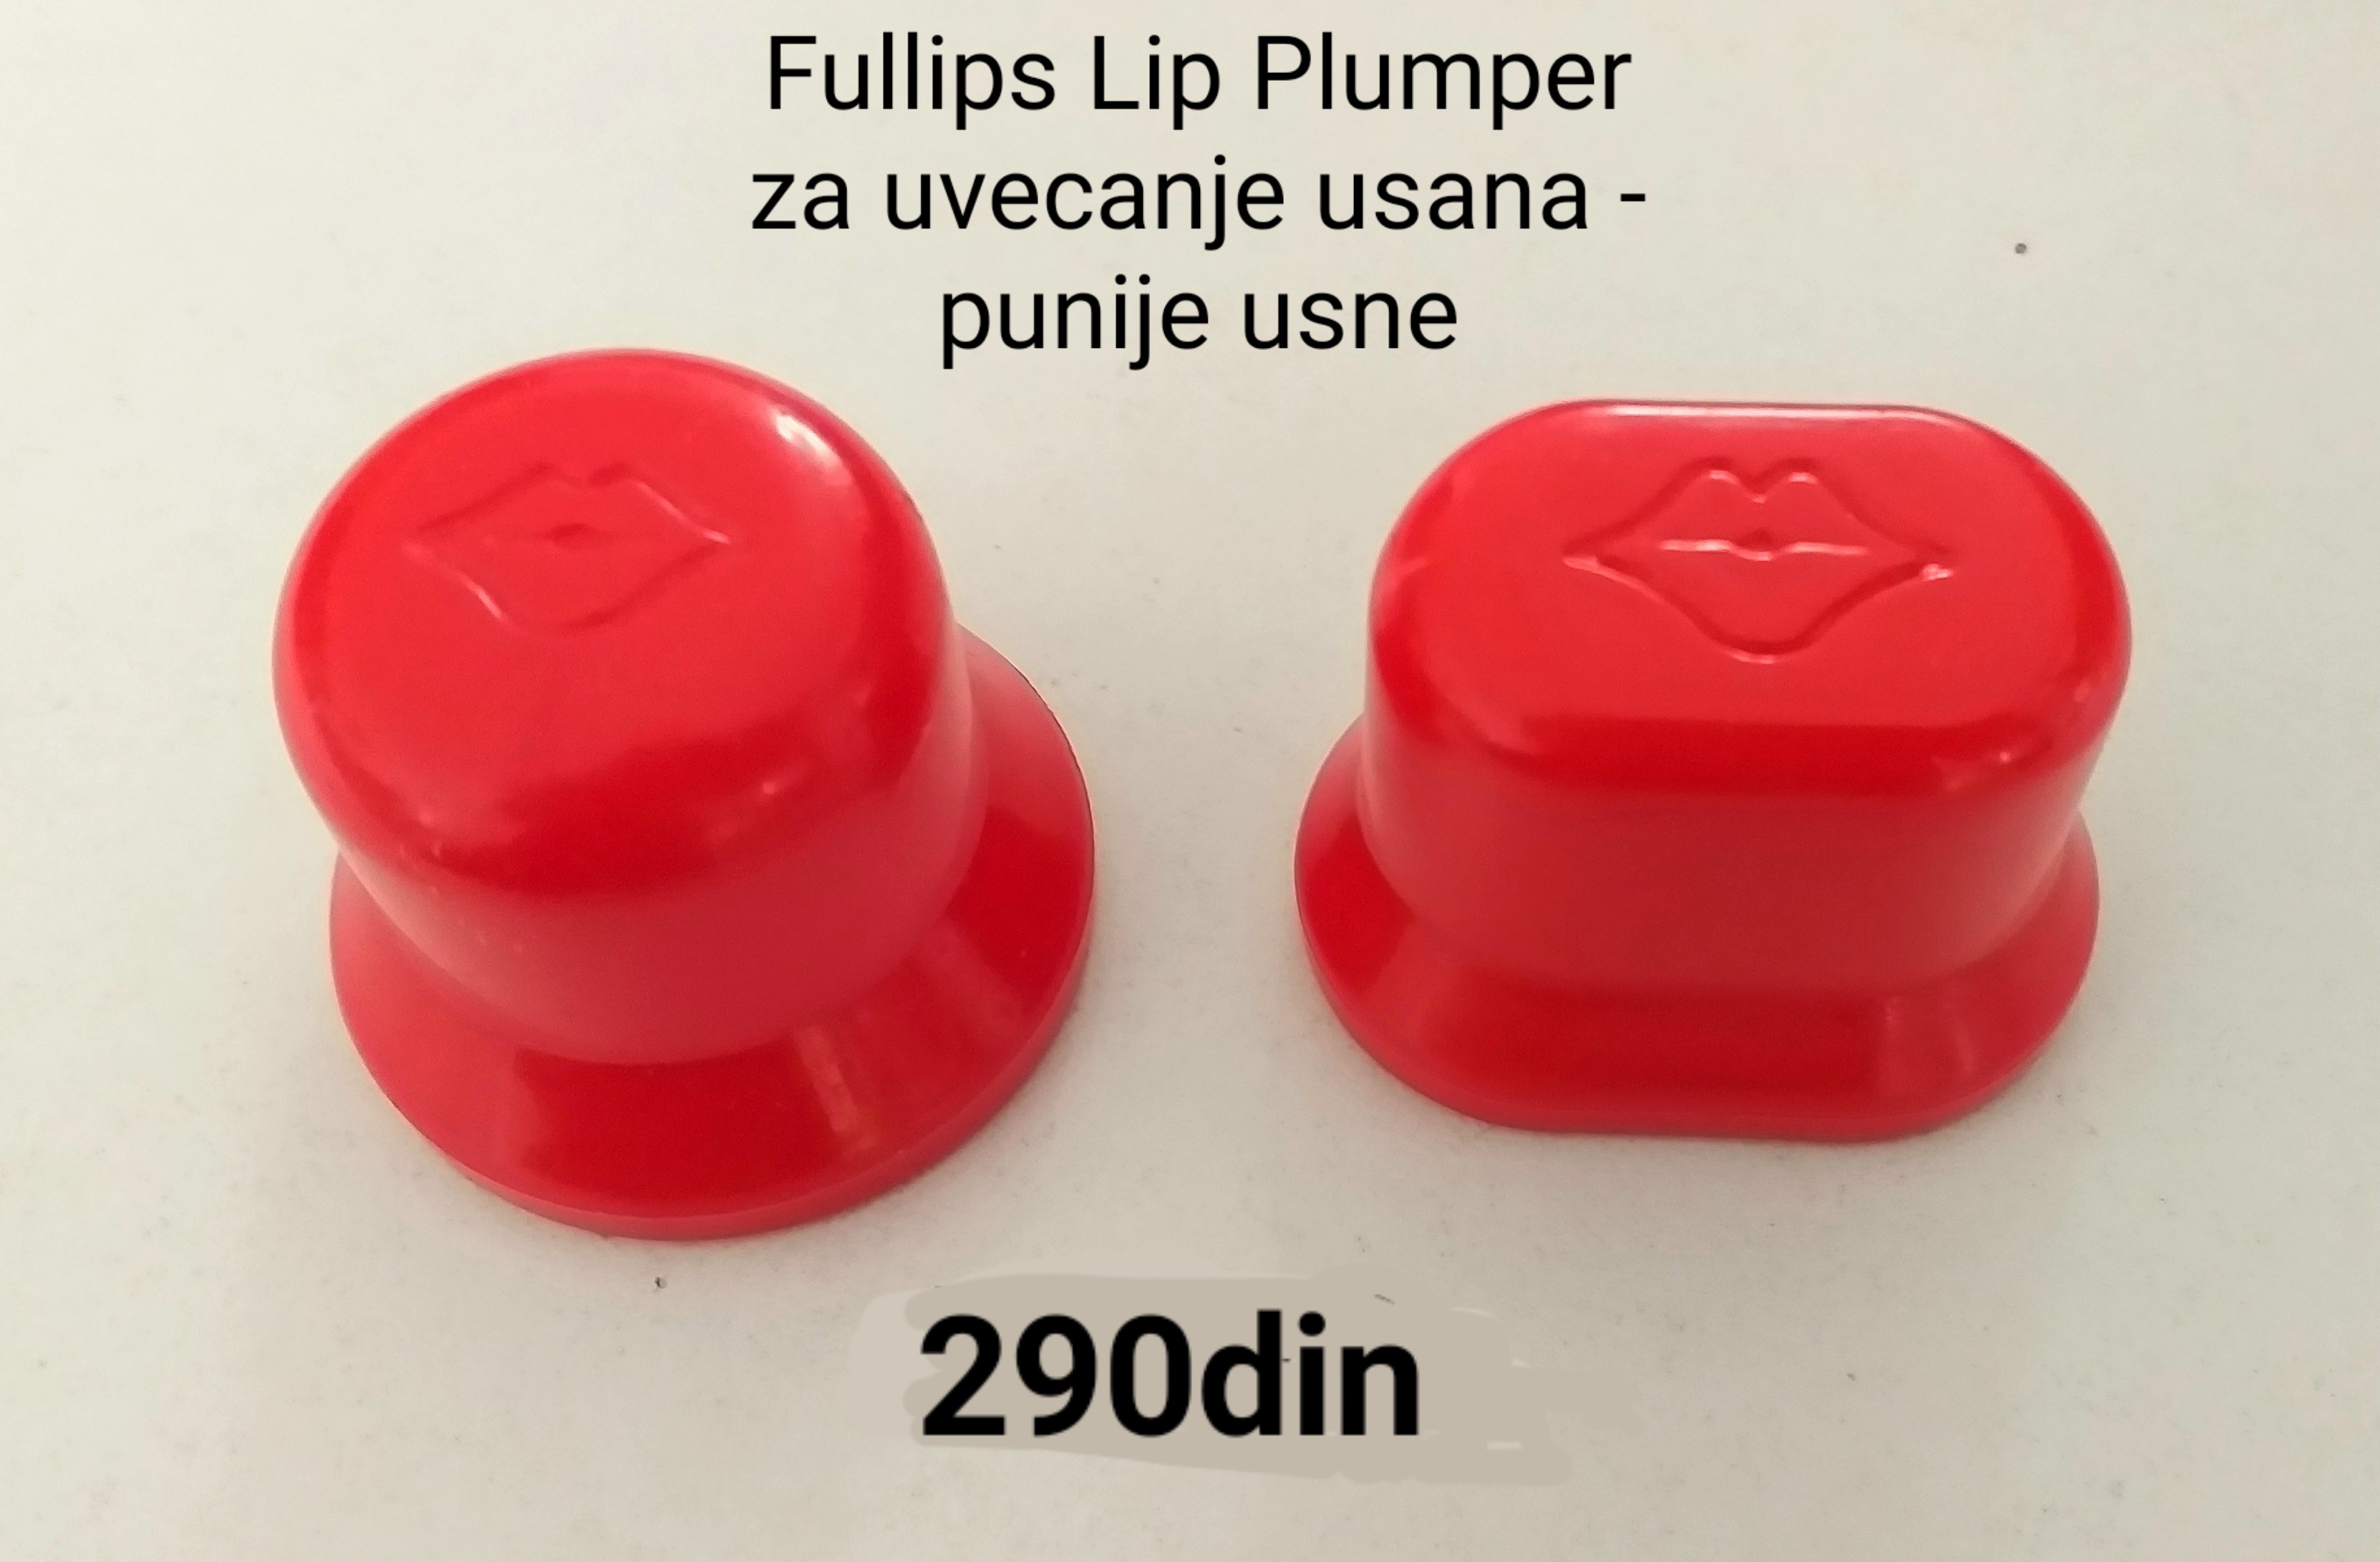 Fullips Lip Plumper za uvecanje usana - punije usne